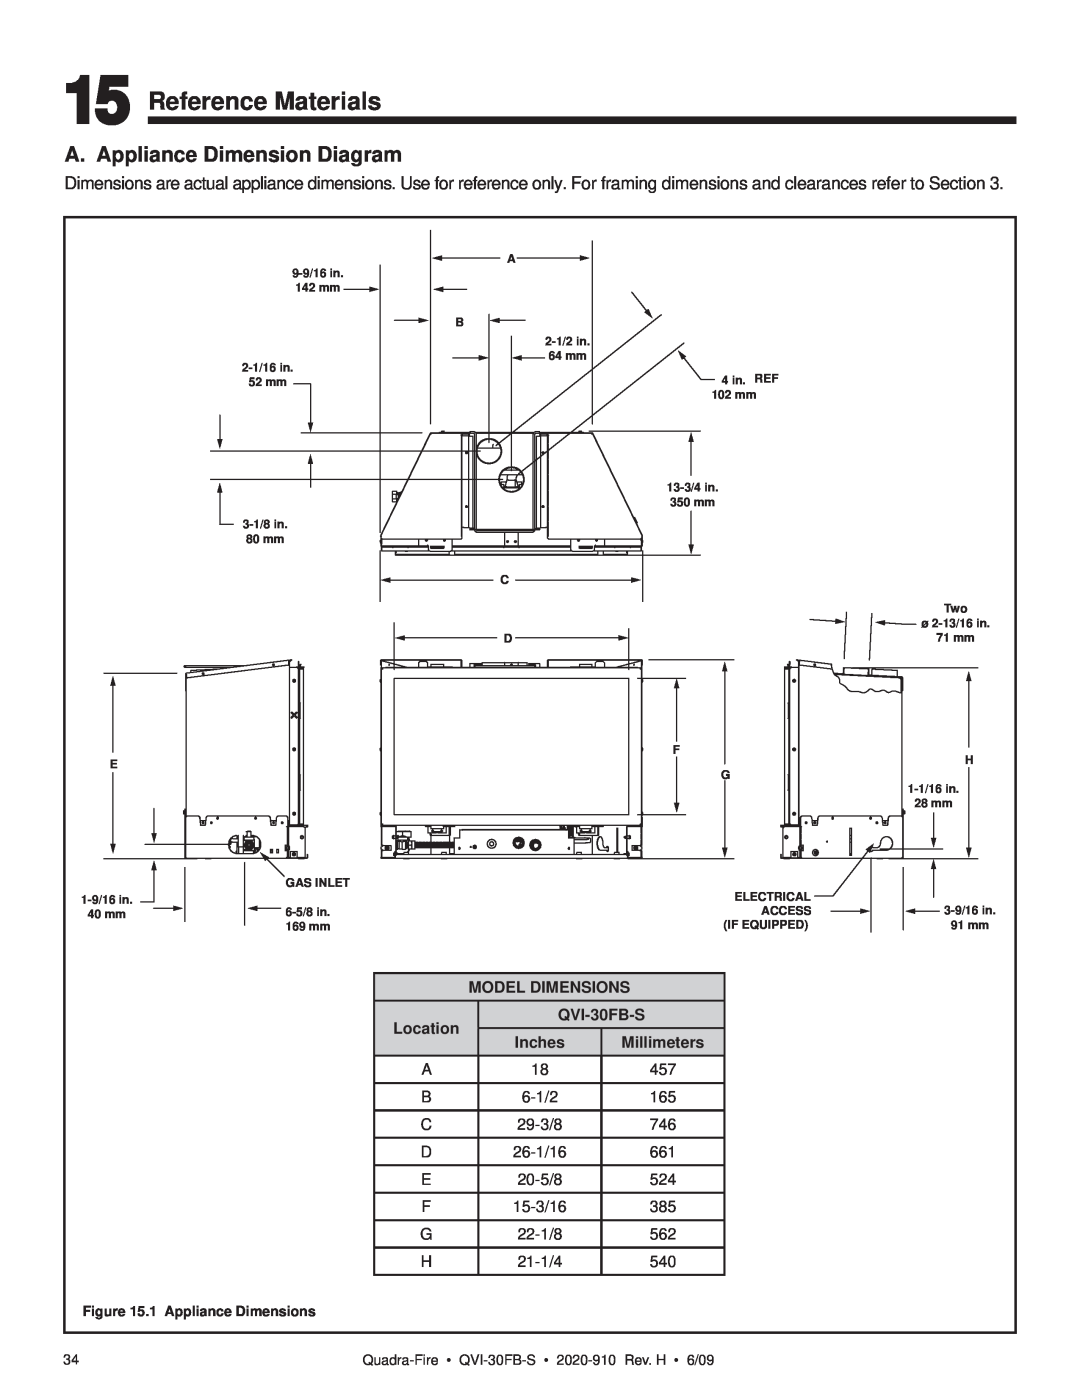 Quadra-Fire QVI-30FB-S Reference Materials, A. Appliance Dimension Diagram, Model Dimensions, Location, Inches, 6-1/2 